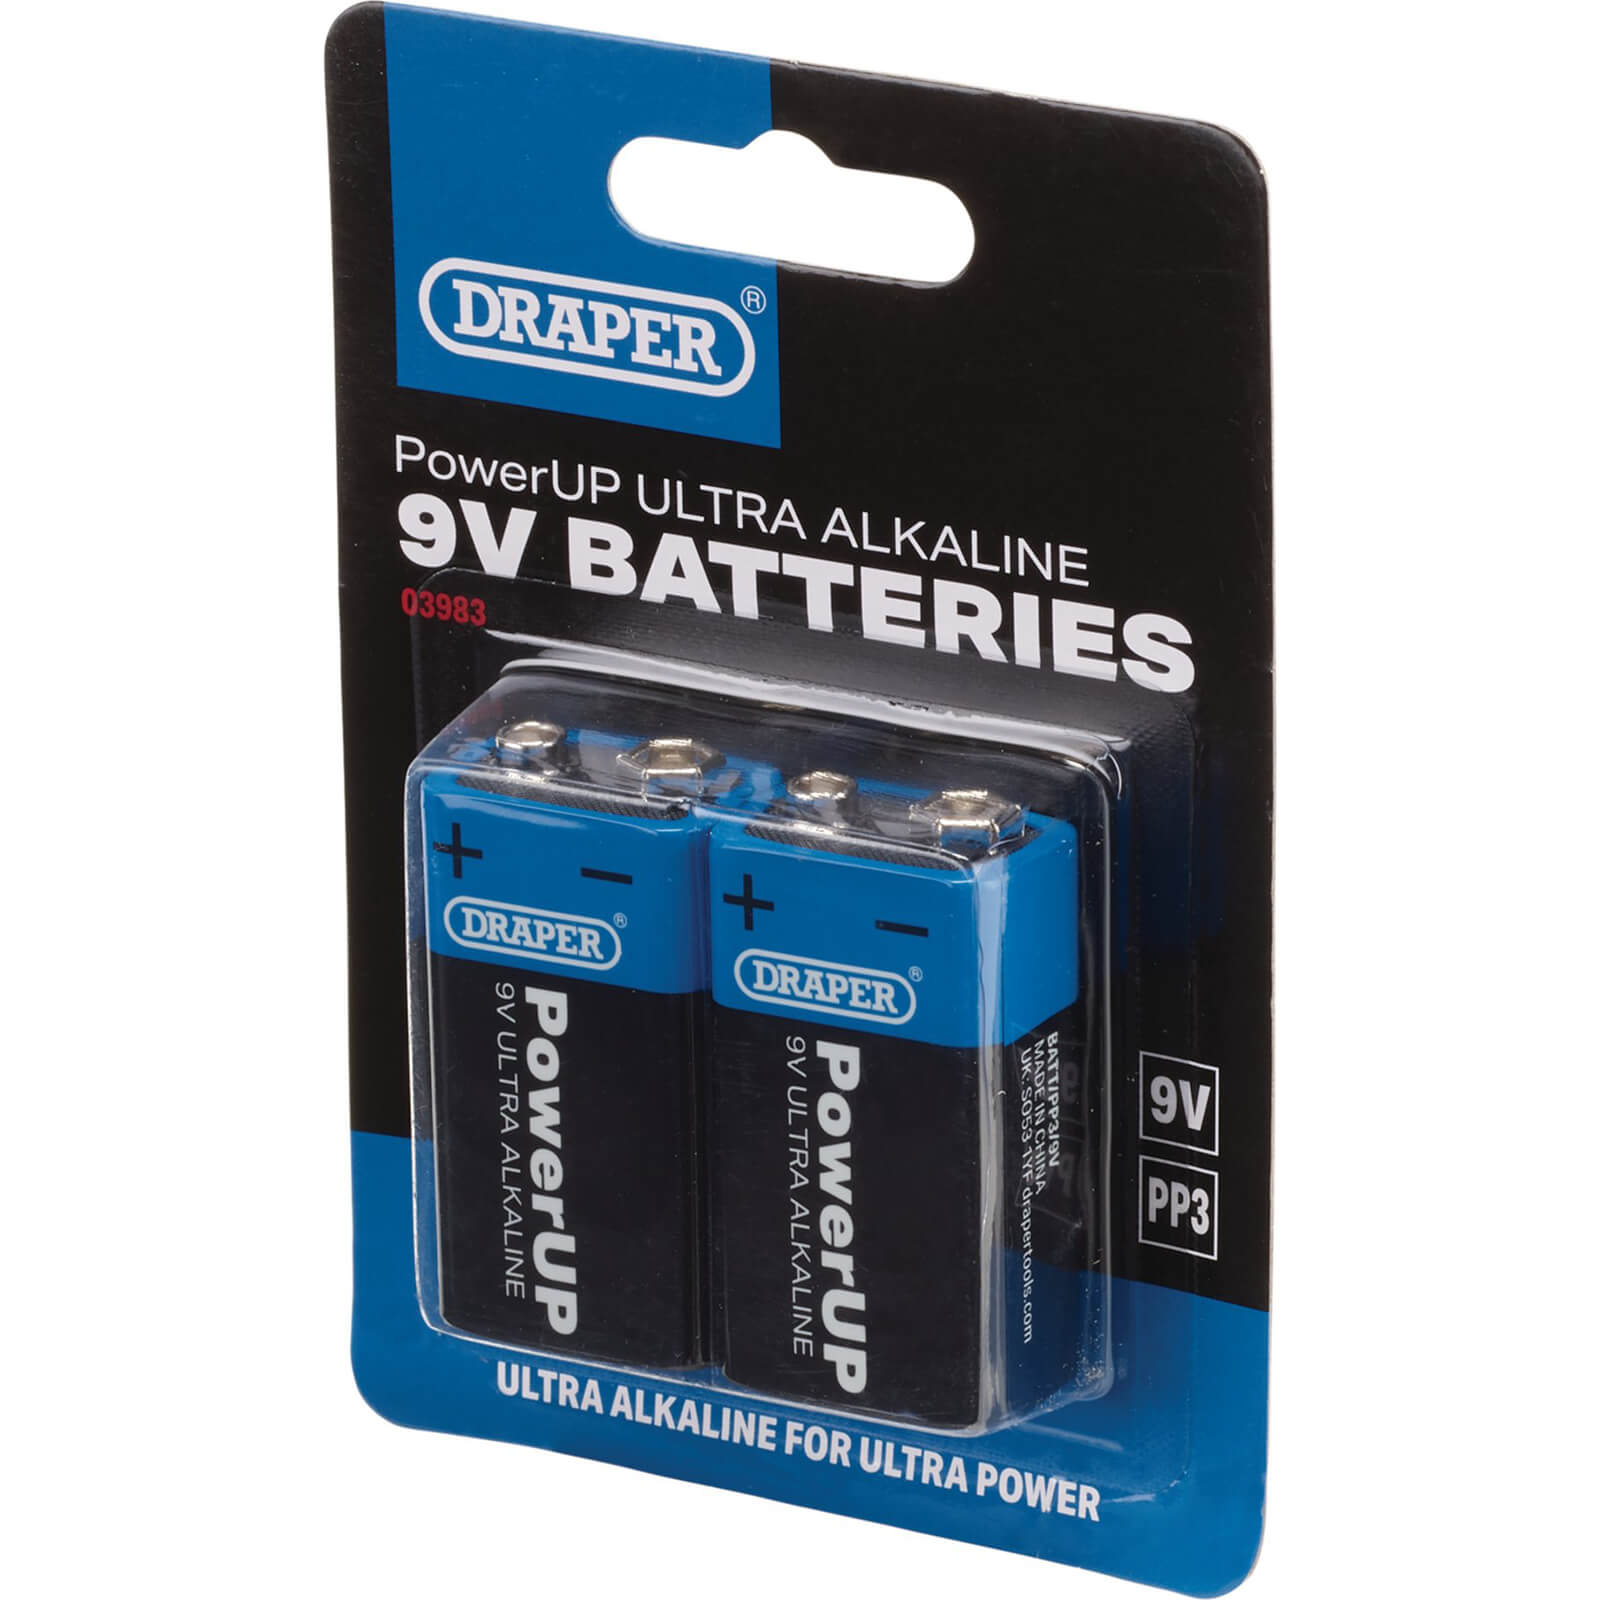 Image of Draper Powerup Ultra Alkaline 9v Batteries Pack of 2